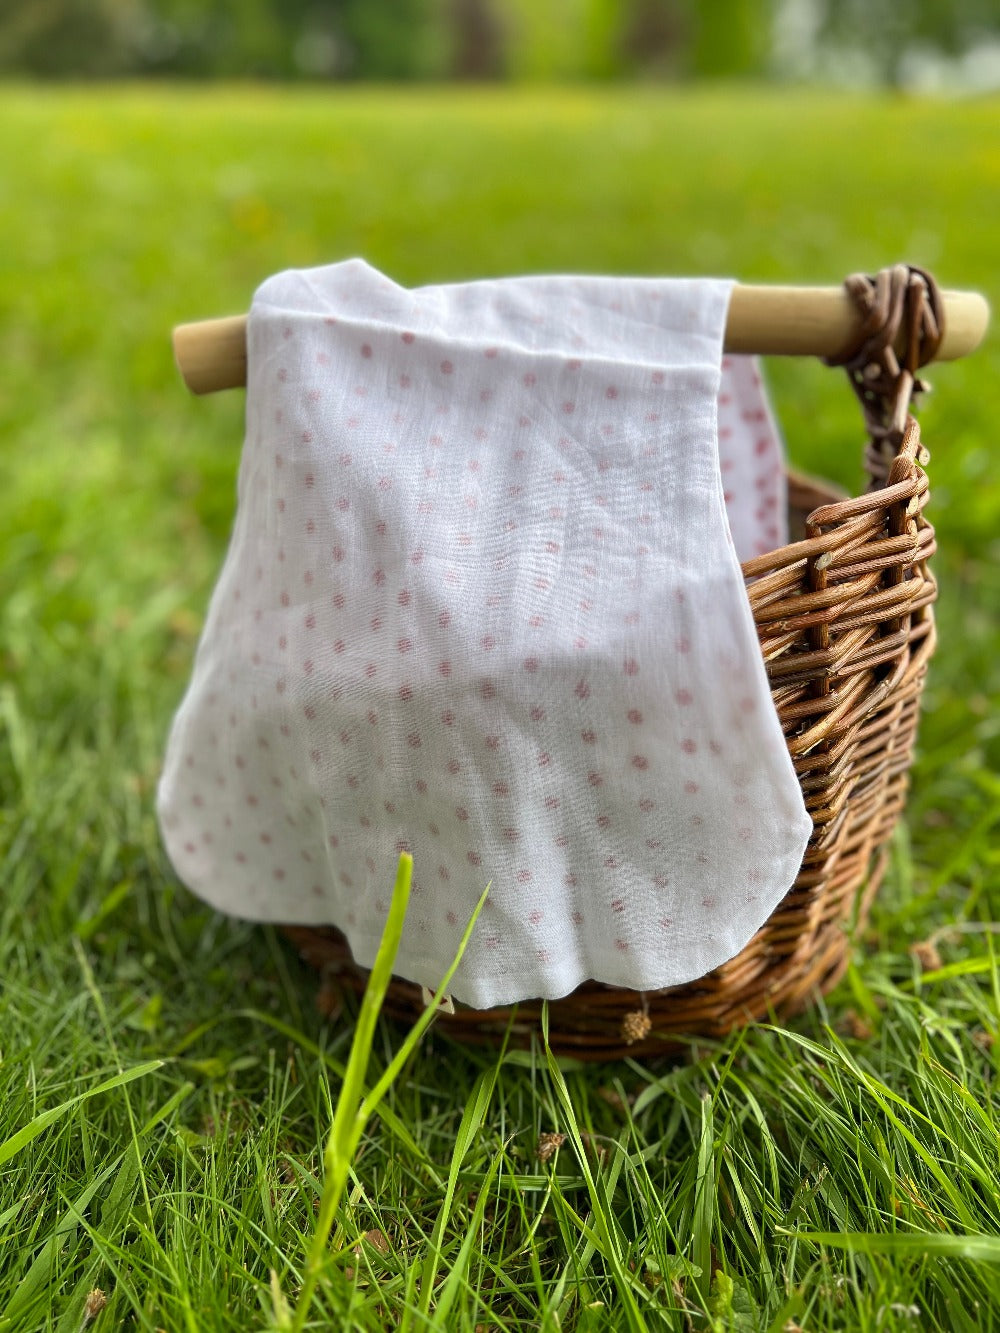 Polka Dot Three Layer 'Baby Comfort/Burpy' Cloth